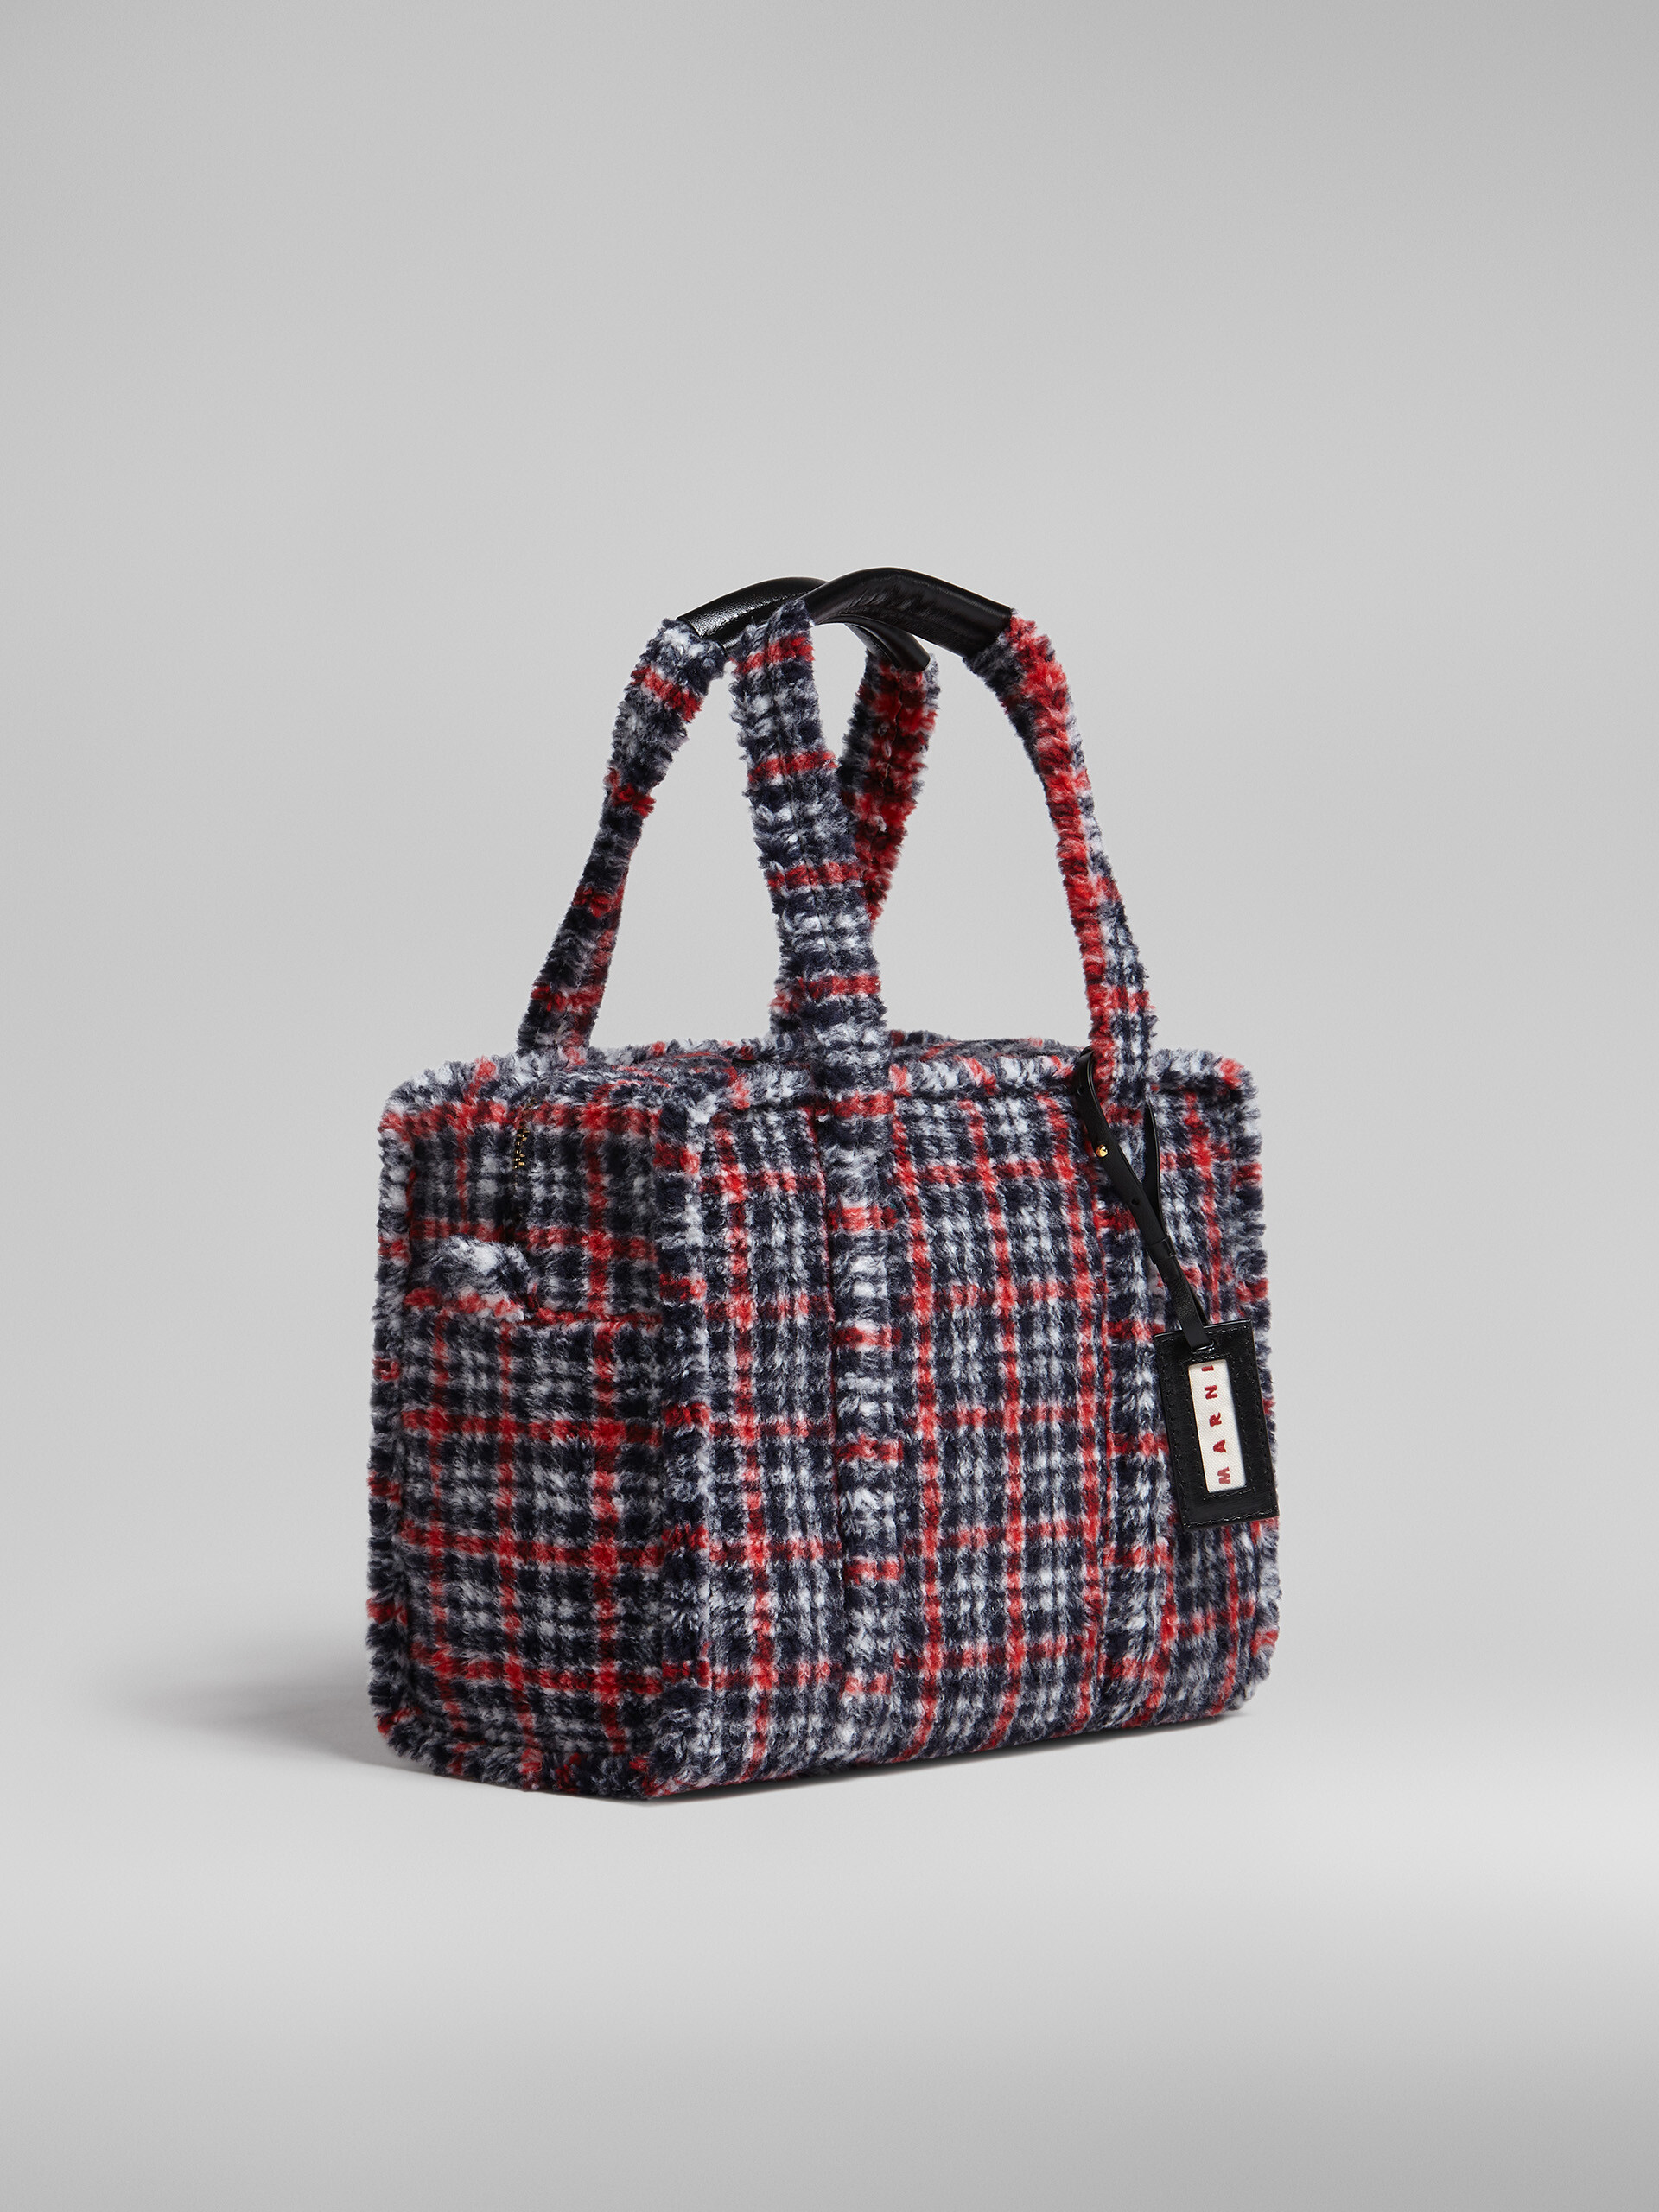 Travel bag piccola in tessuto check - Borse shopping - Image 6